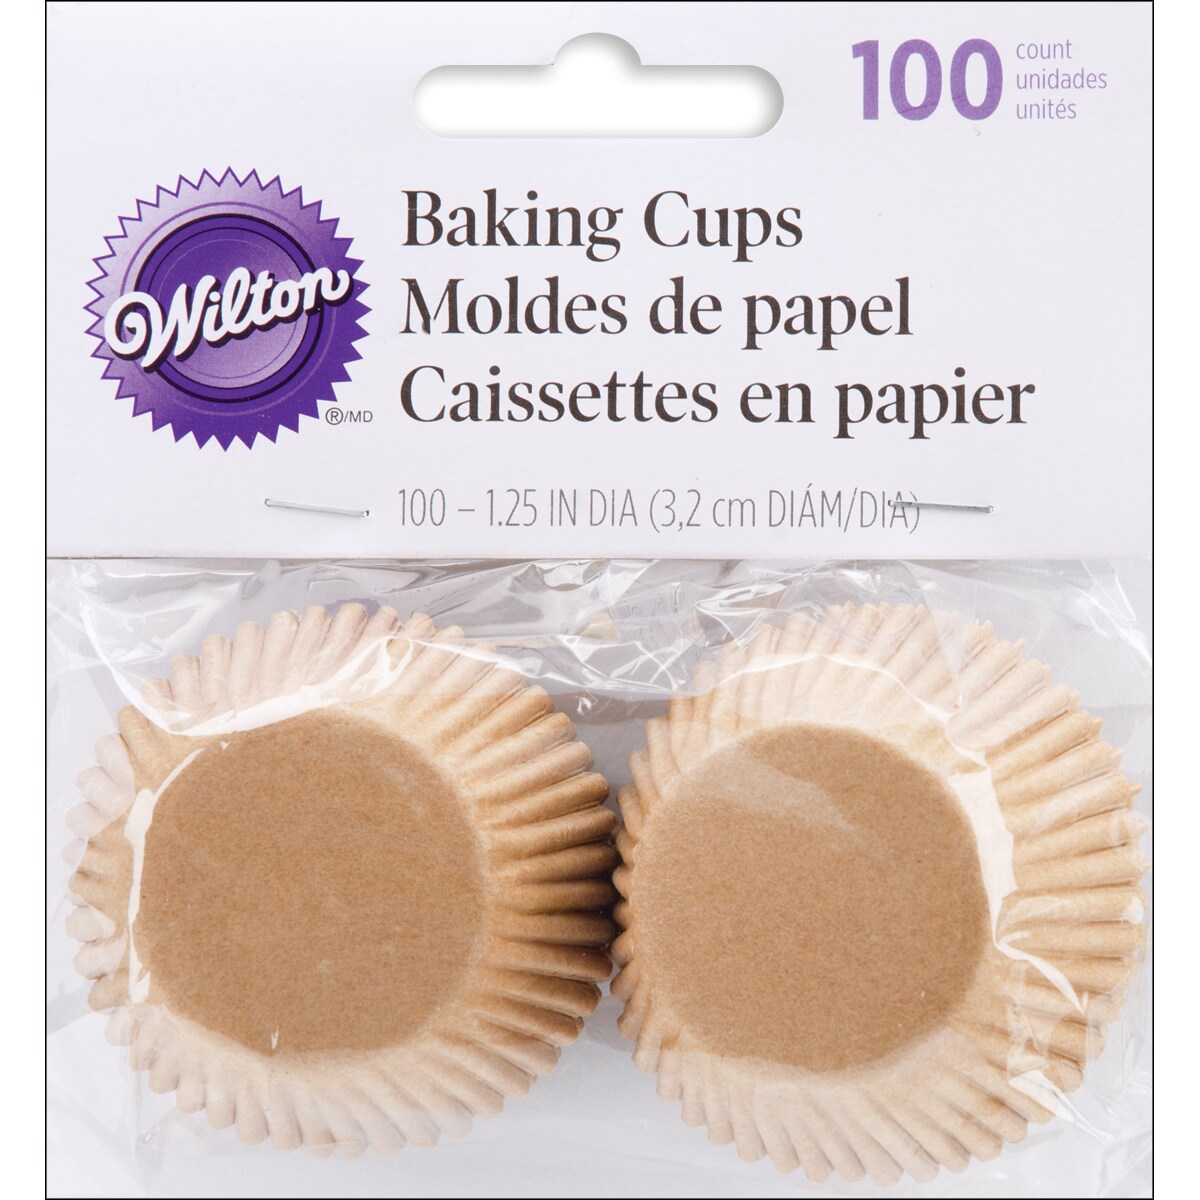 Wilton Baking Cups, Mini - 100 baking cups